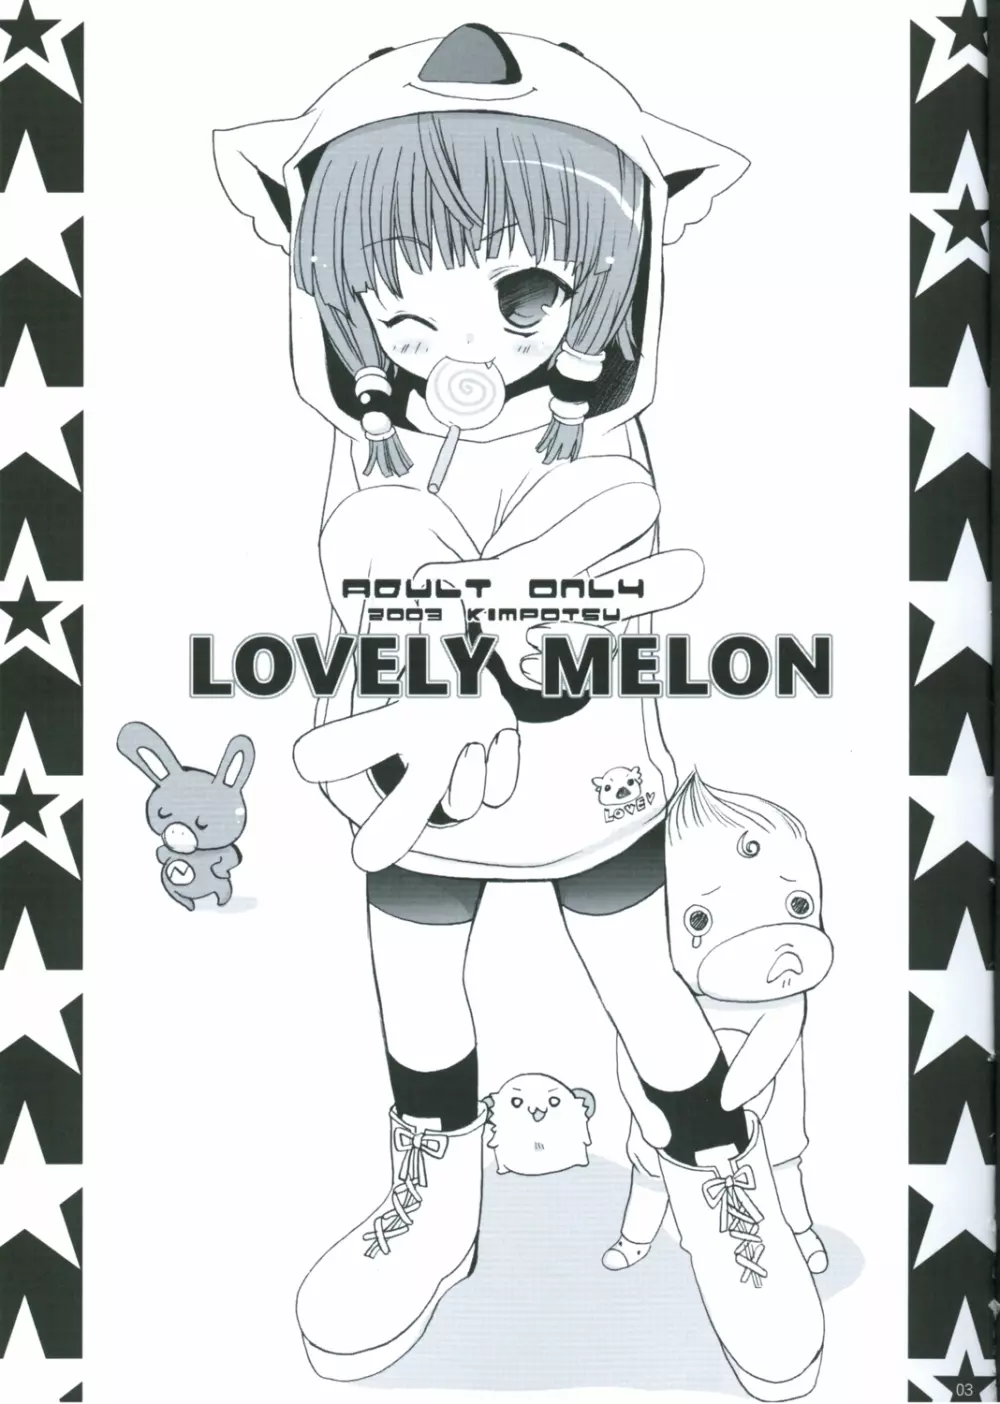 LOVELY MELON - page2